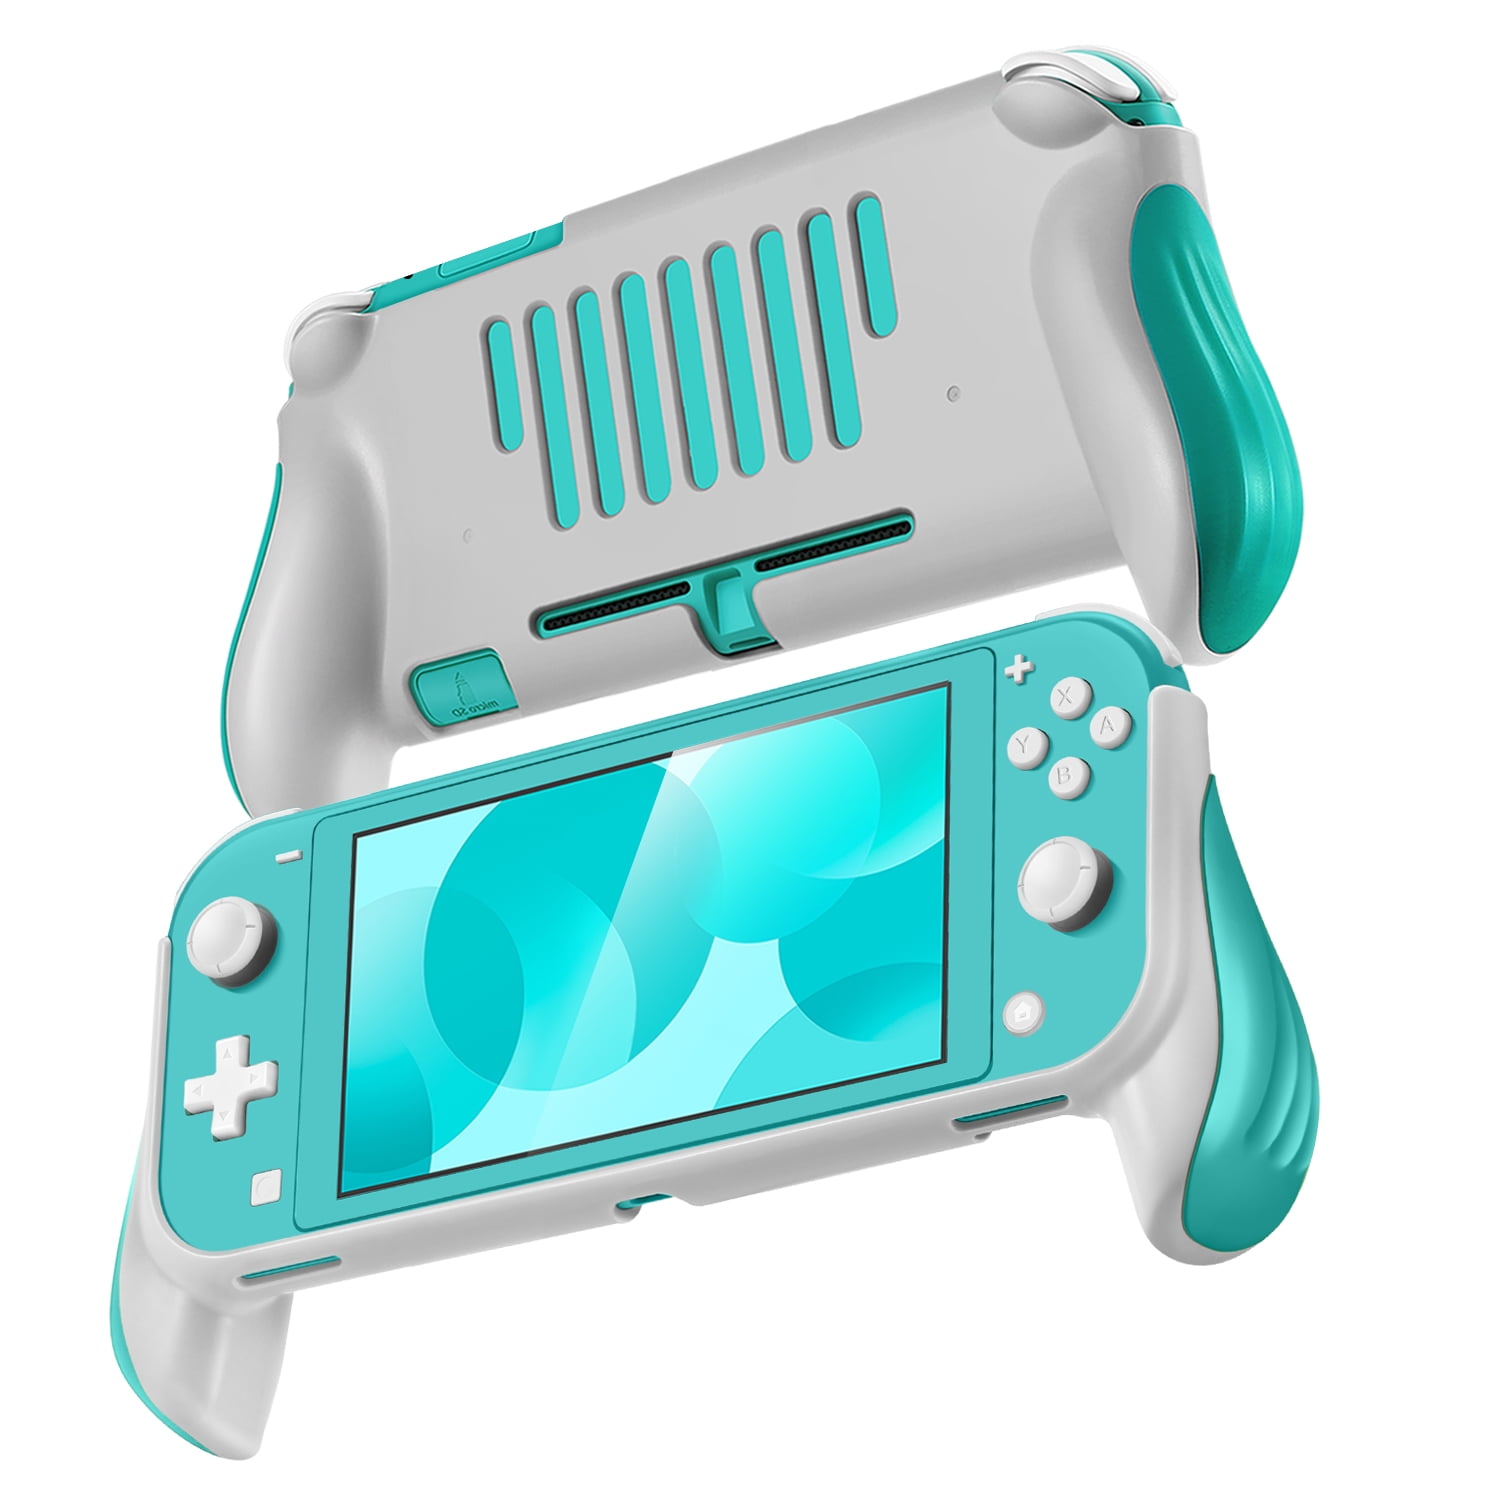 Pro Grip Case for Nintendo Switch Lite Protective Shell Cover (Blue) Comfort Enhance Ergonomic Grips, Lightweight, Slim, Scratch & Shock Protector Nintendo Switch Lite Walmart.com